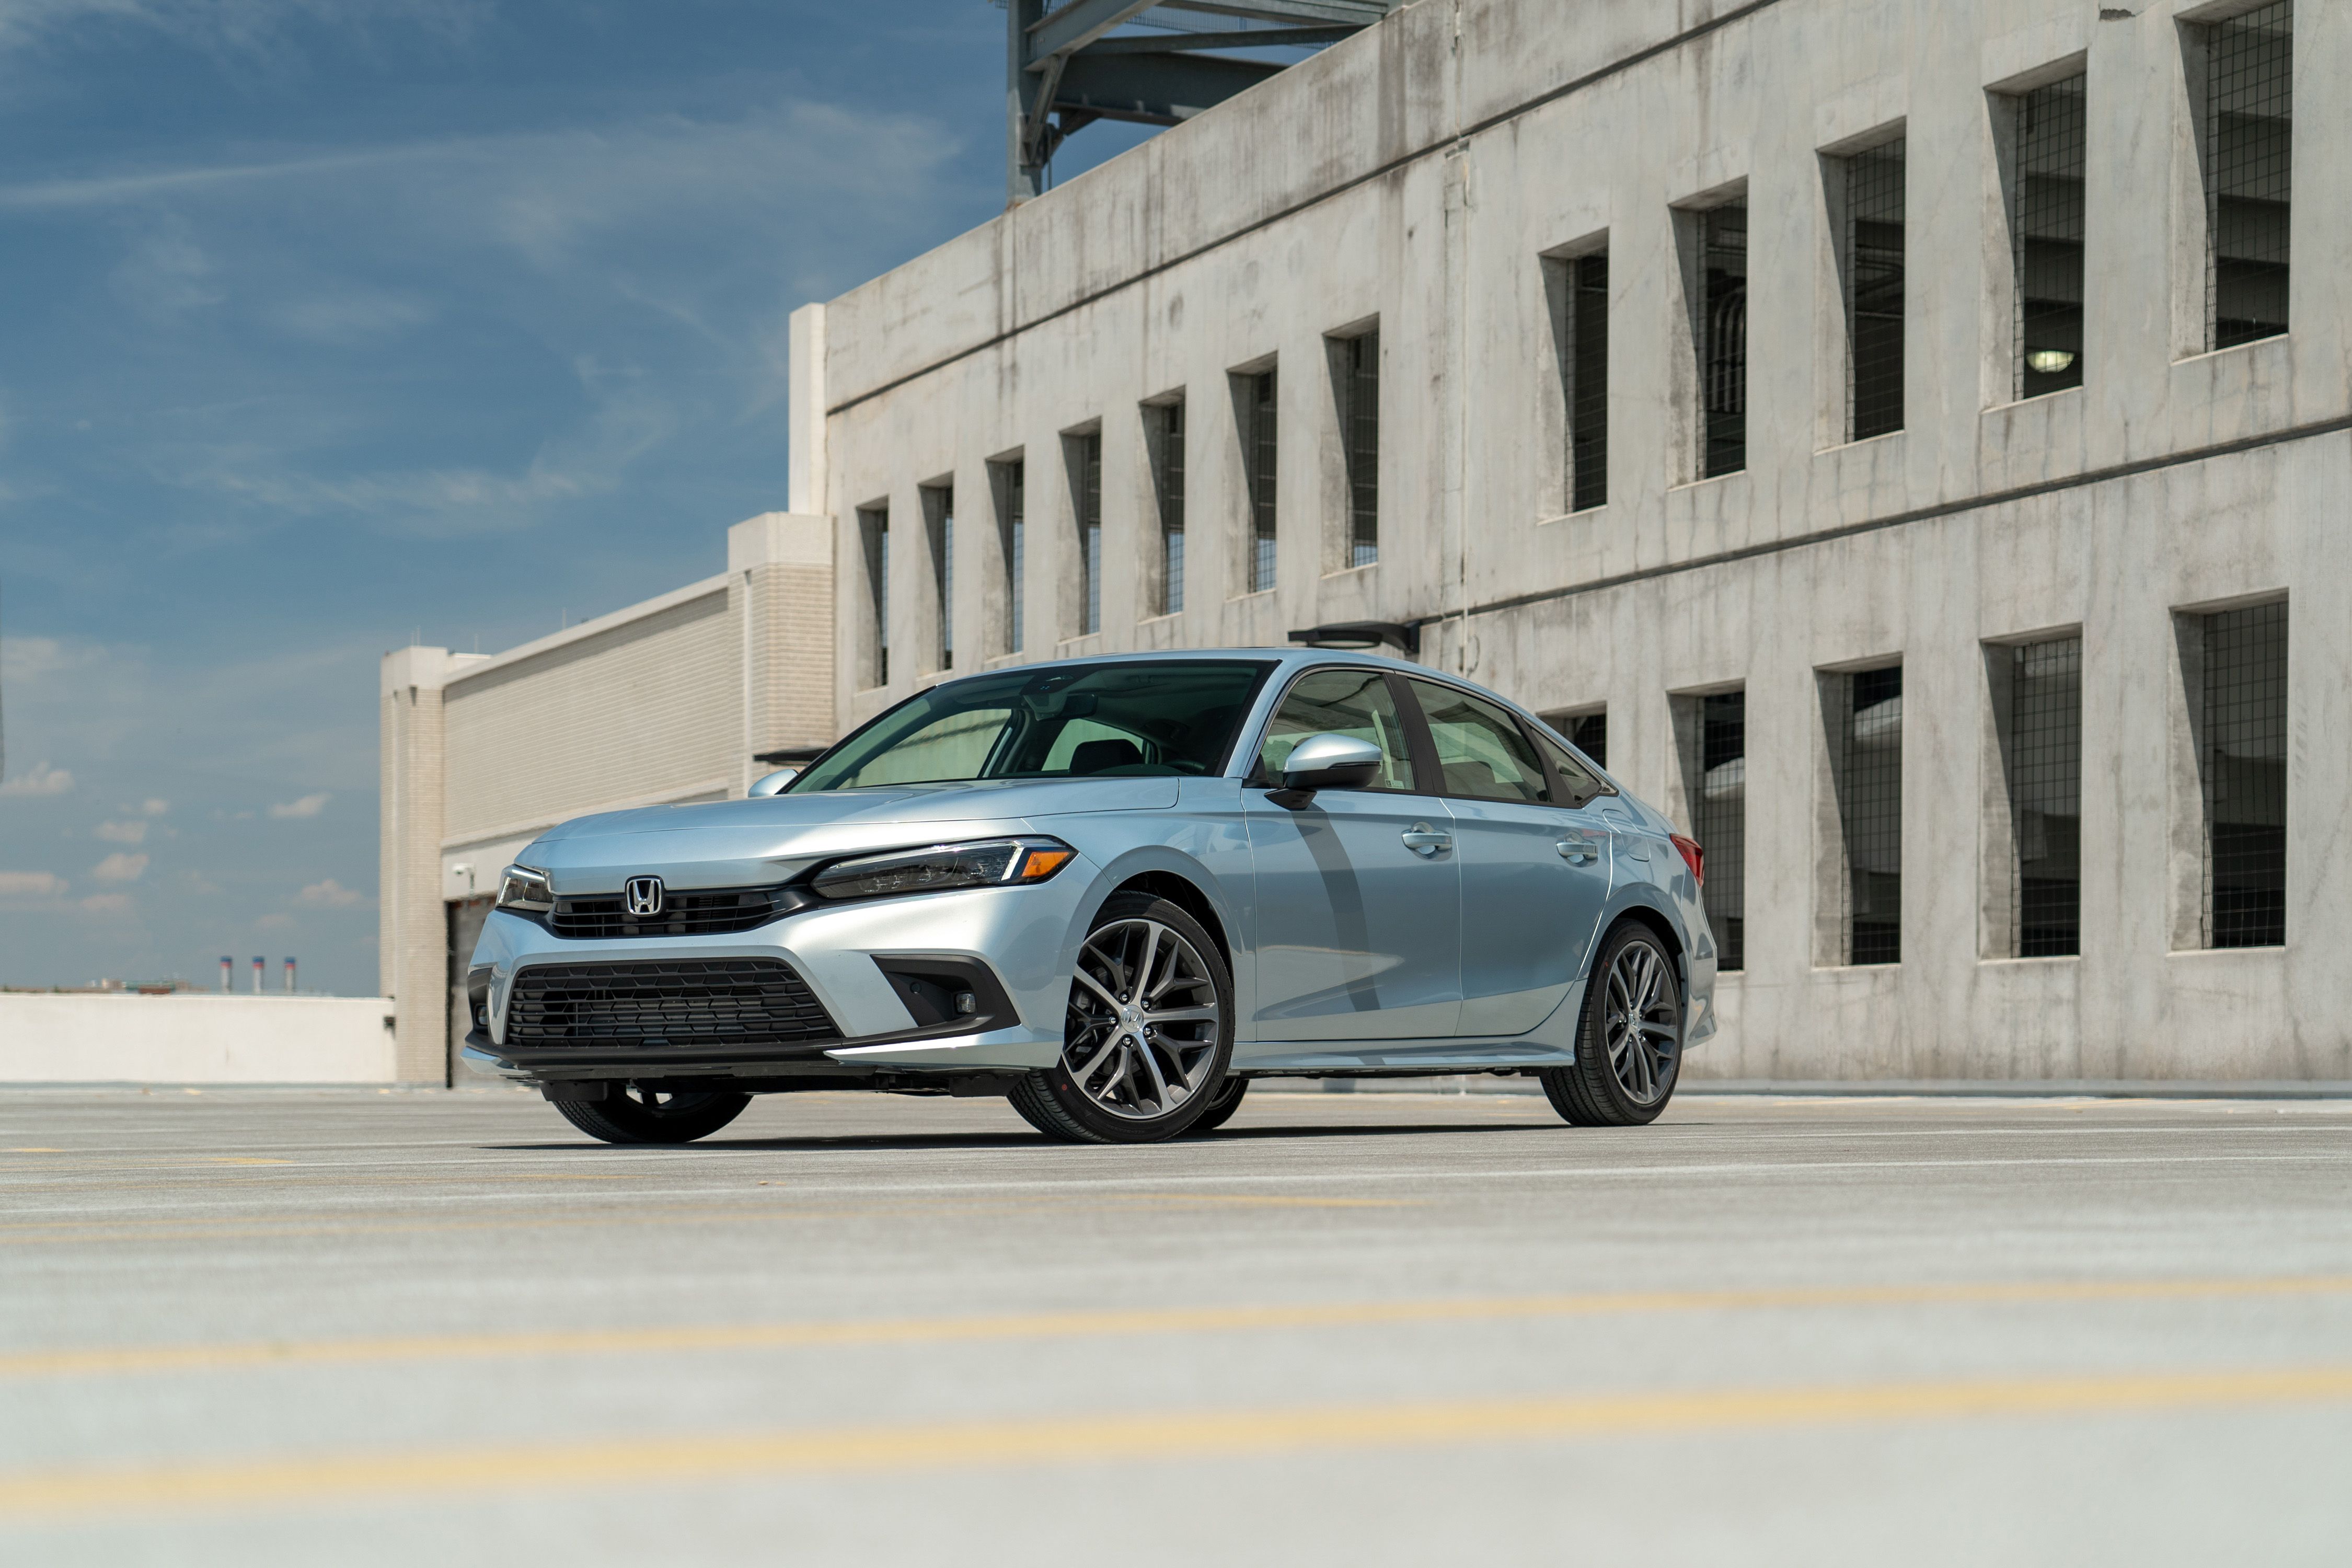 2019 Honda Civic Hatchback Sport Seat Covers Velcromag